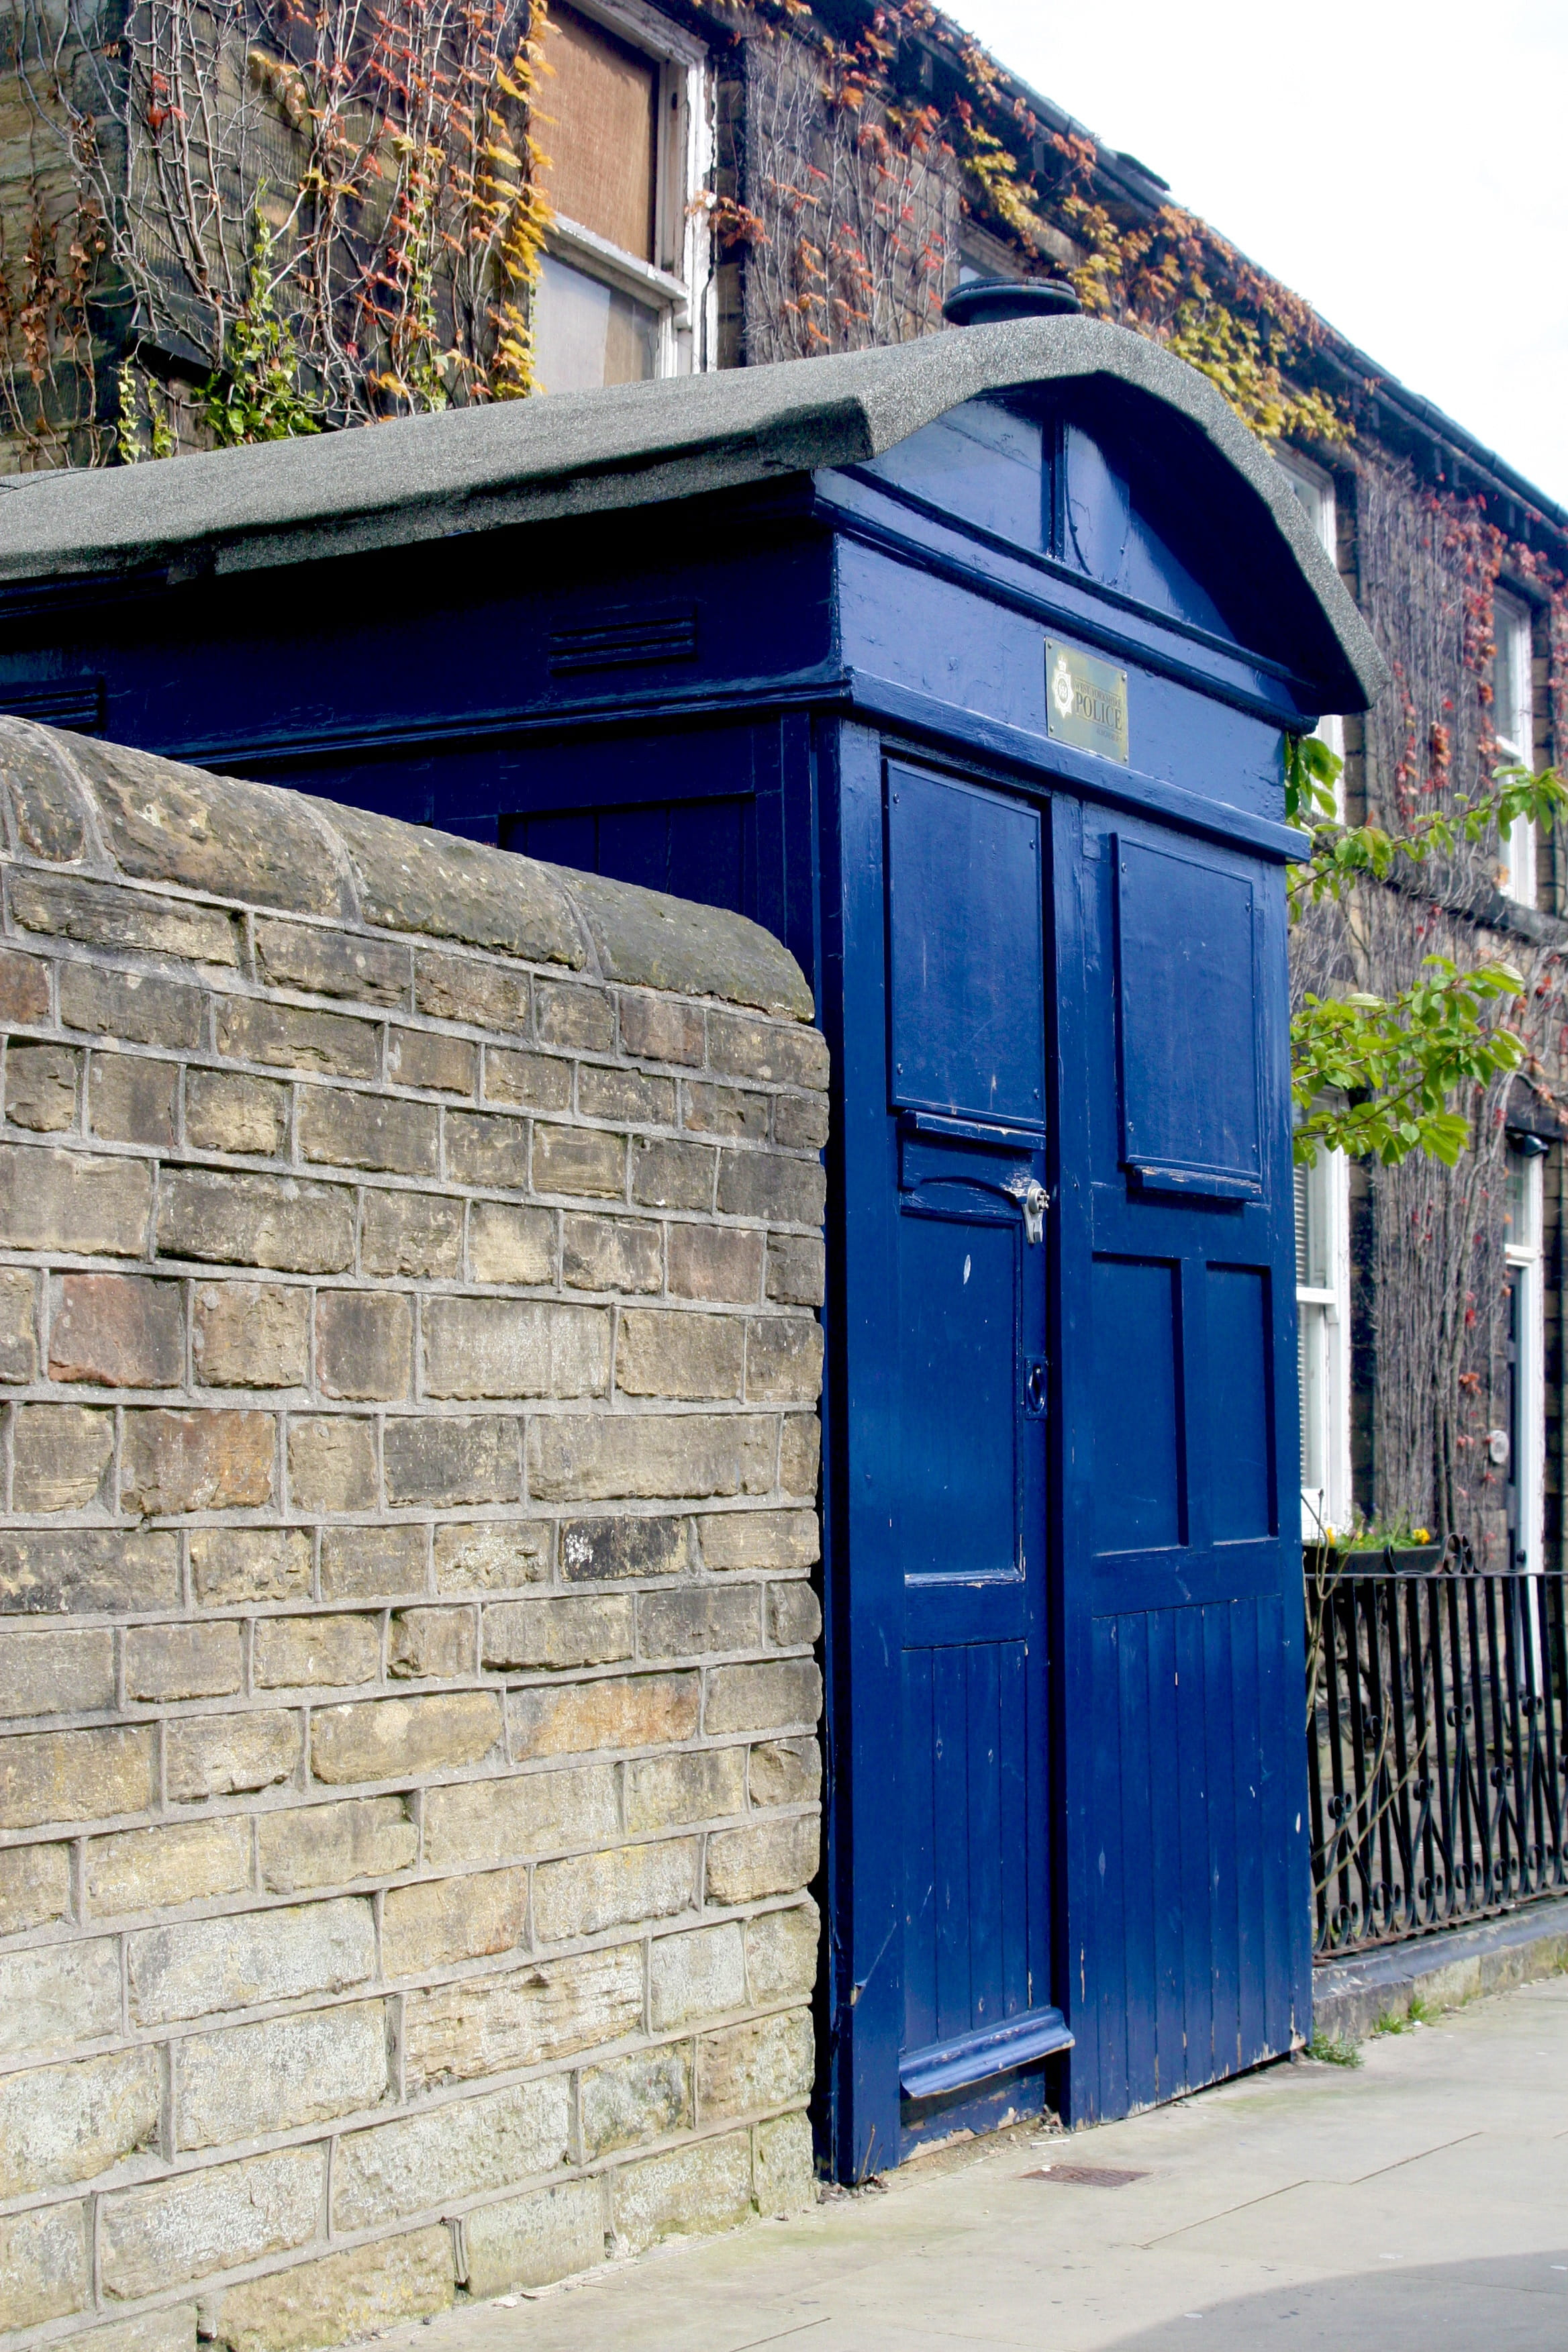 police box, almondbury, west yorkshire, uk, history, secure